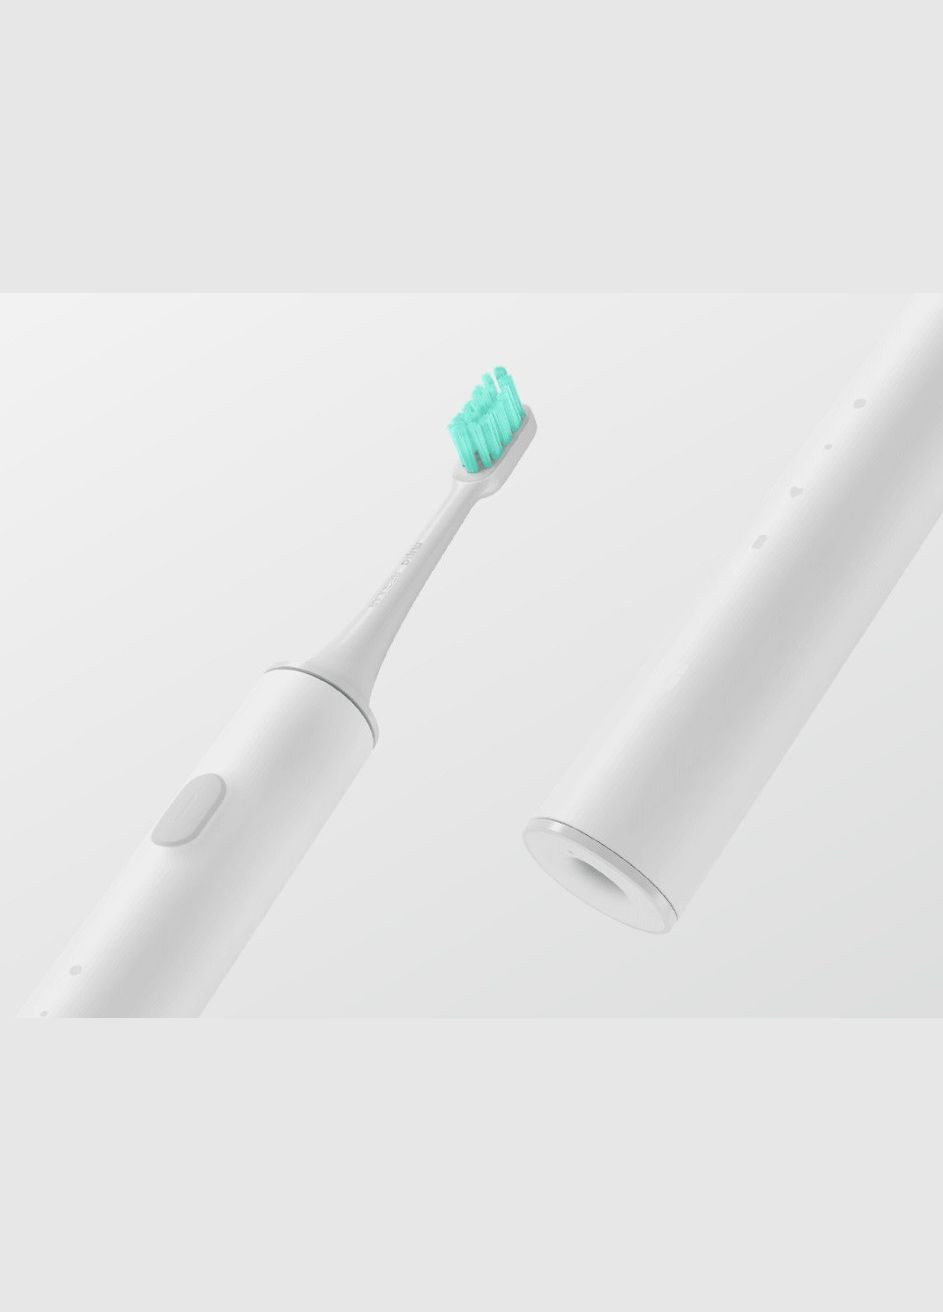 Насадка для зубной щетки MiJia Electric Toothbrush Mini 3 шт. Набор Xiaomi (280876536)